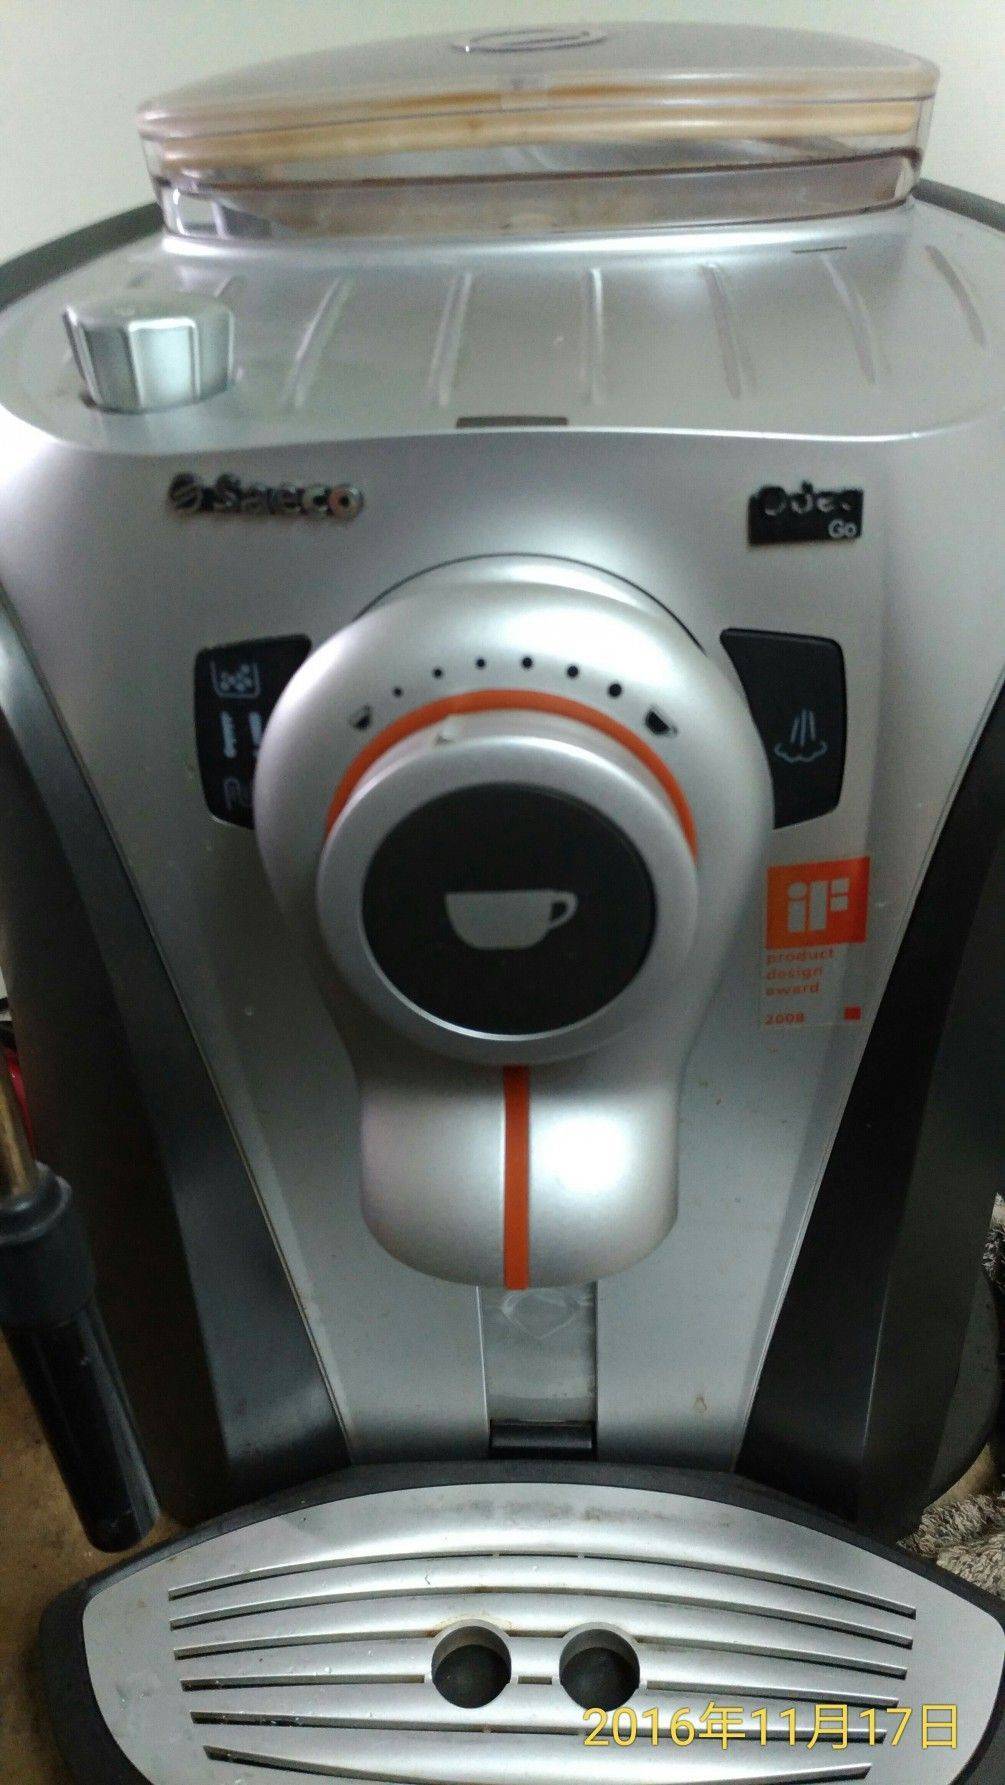 saeco-odea沖泡咖啡無法正常出水更新零件105.11.17梧棲鎮劉先生維修處理